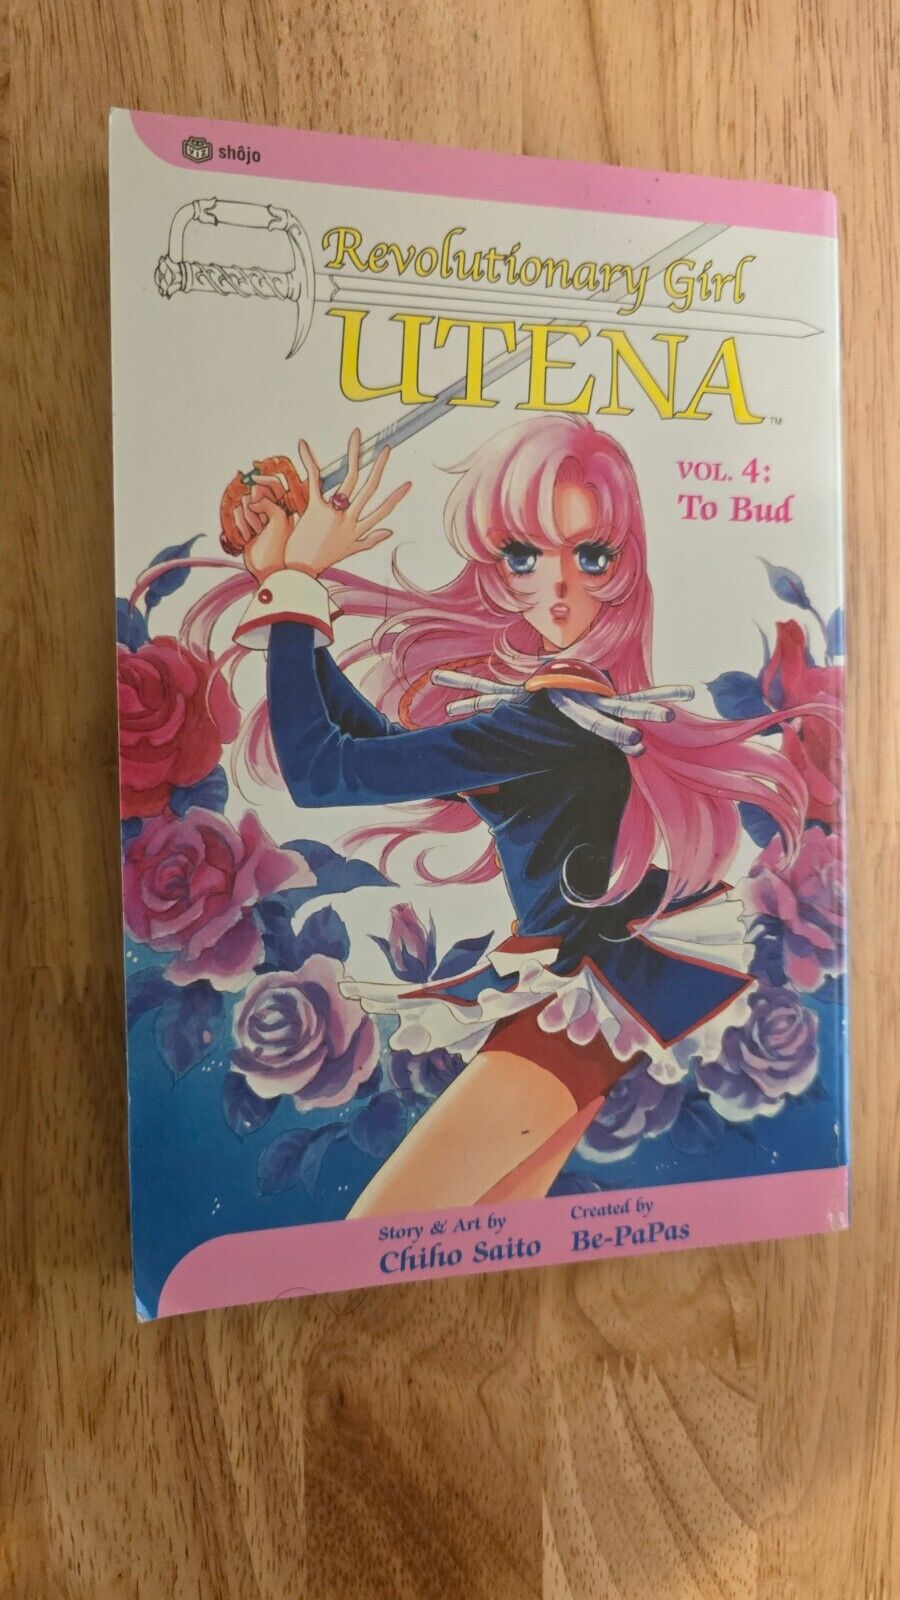 Revolutionary Girl UTENA Volume 4 by Chiho Saito, Shojo Manga